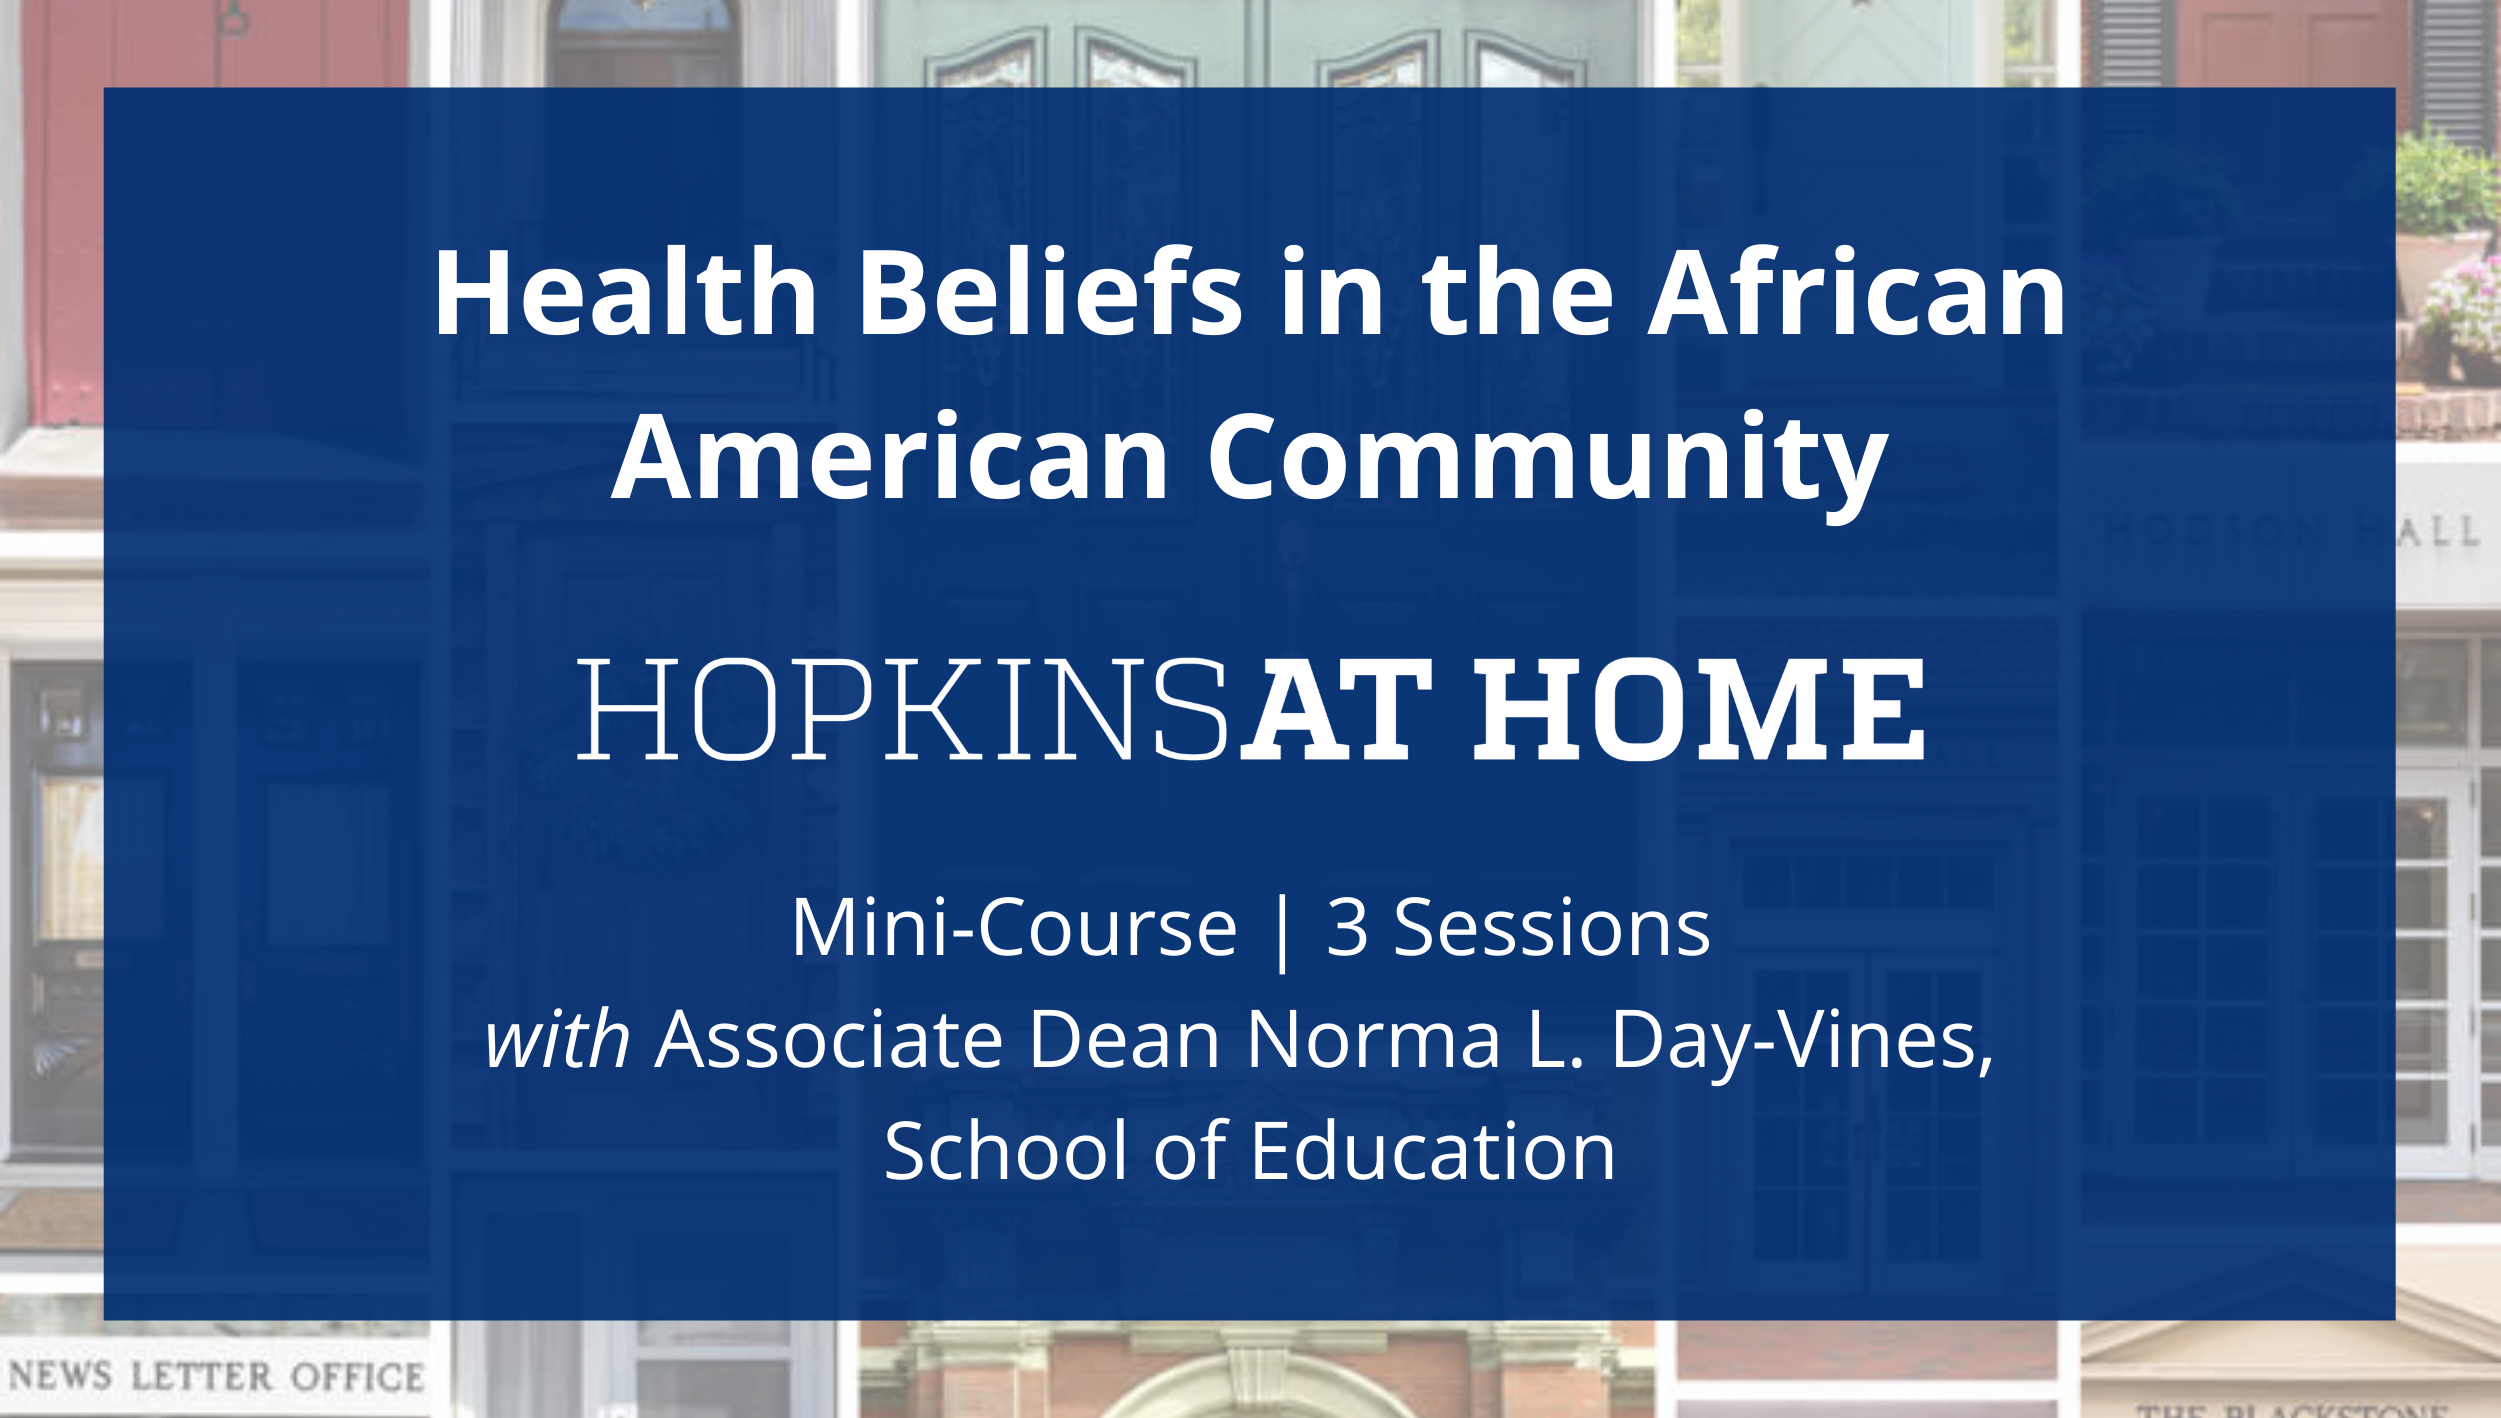 Health Beliefs in the African American Community